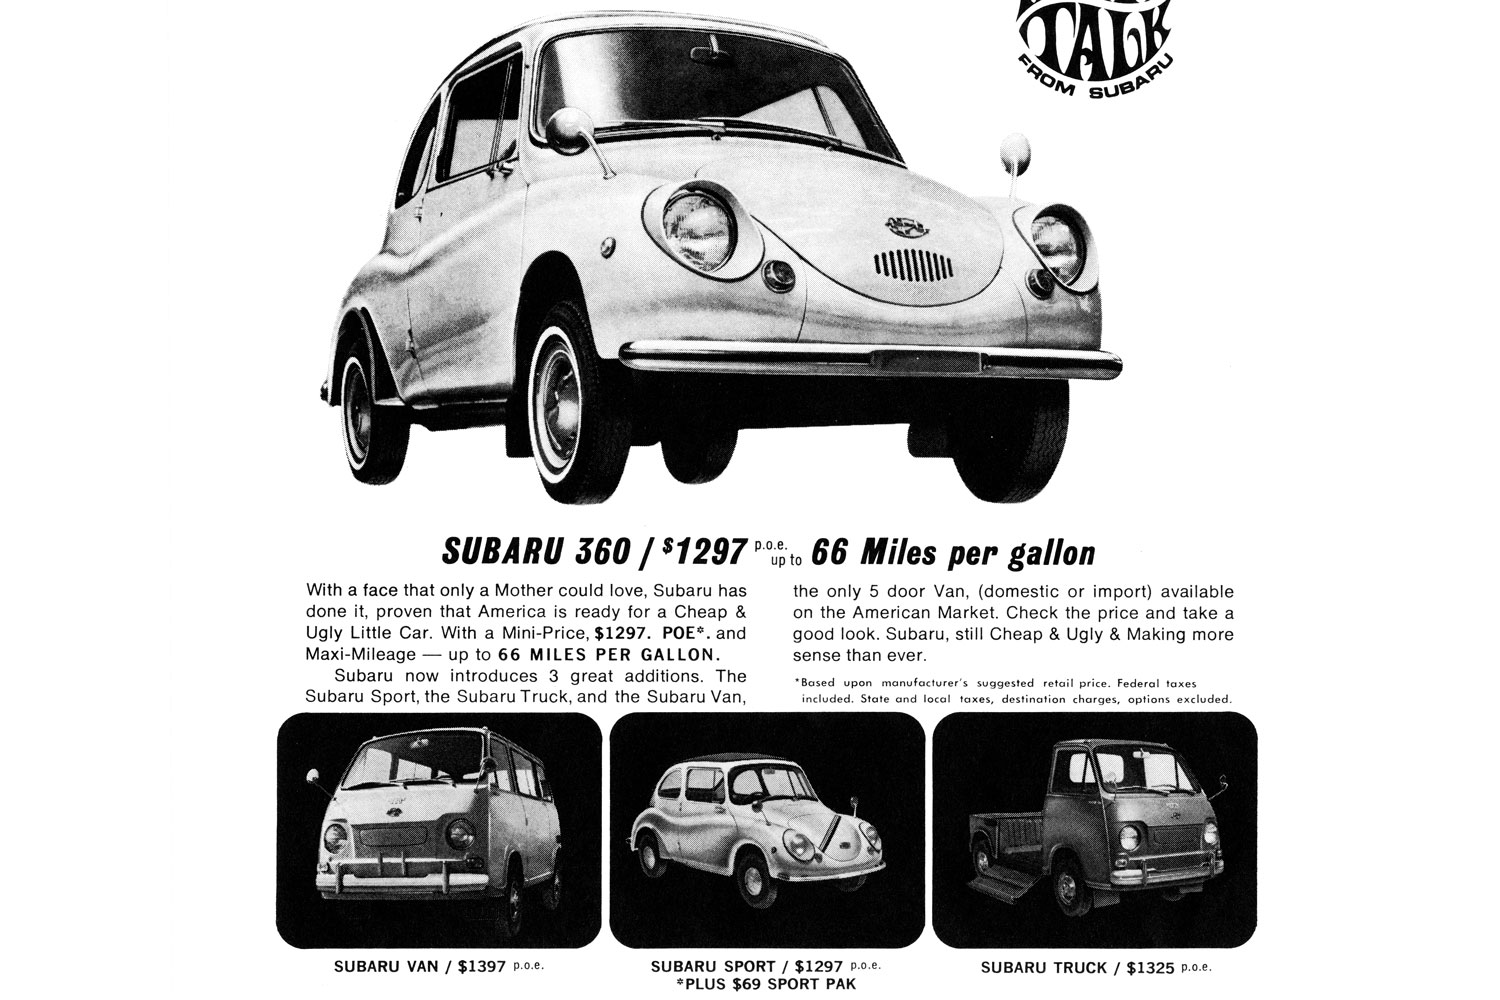 1968 Subaru 360 advertisement